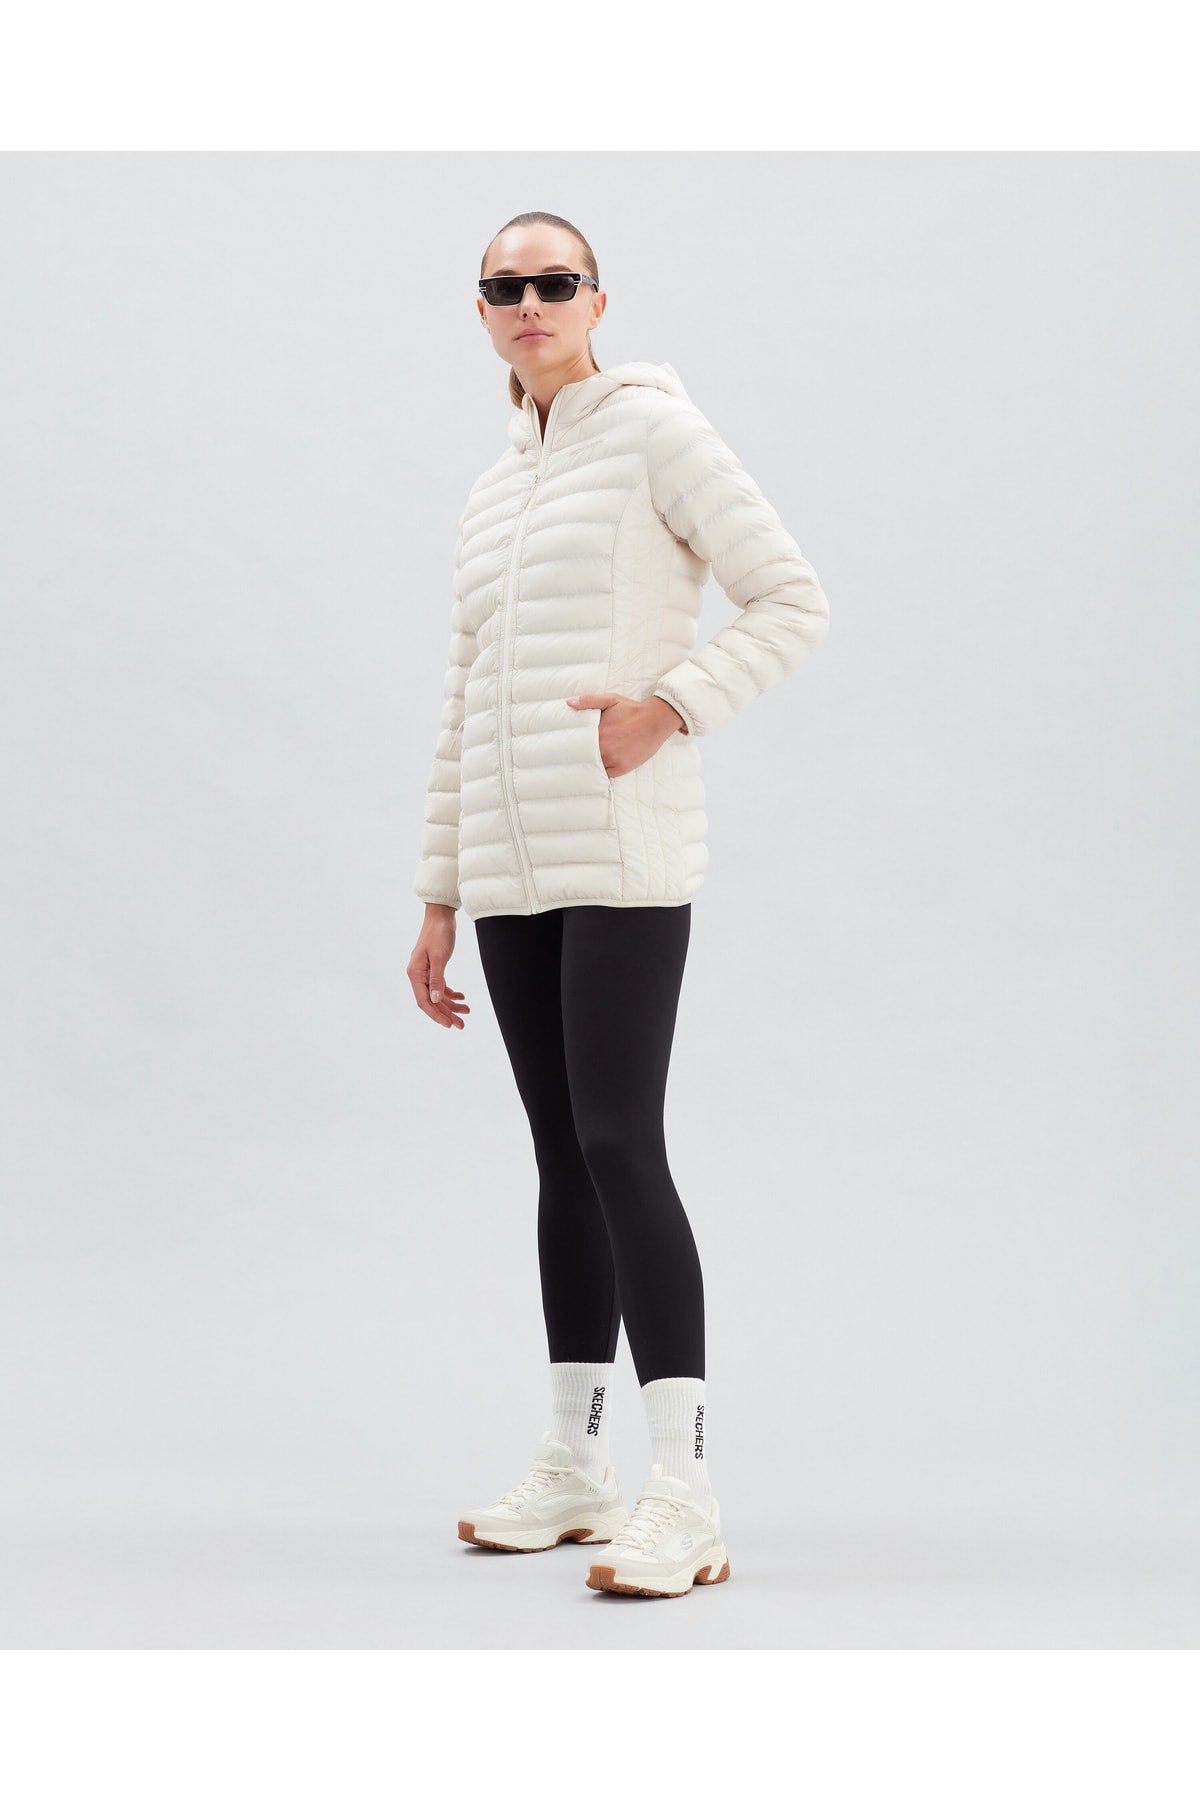 Women's White Coat PN:6029886